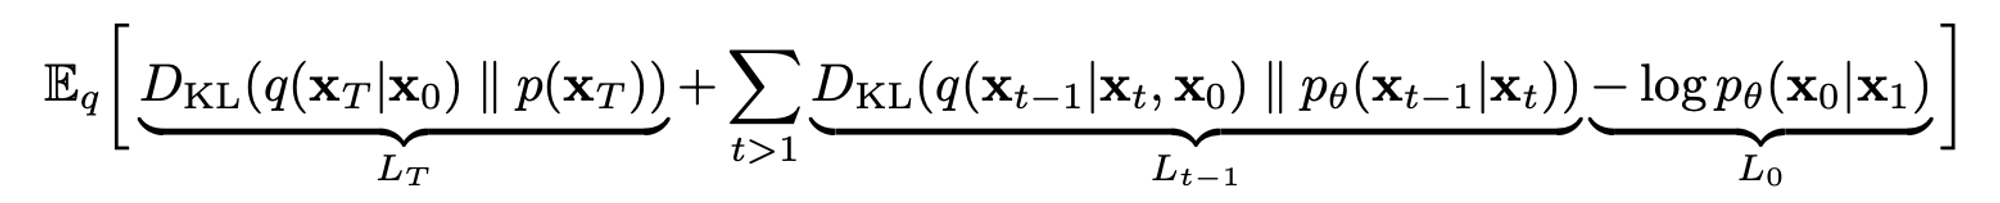 Diffusion Model의 최종적인 Loss Function